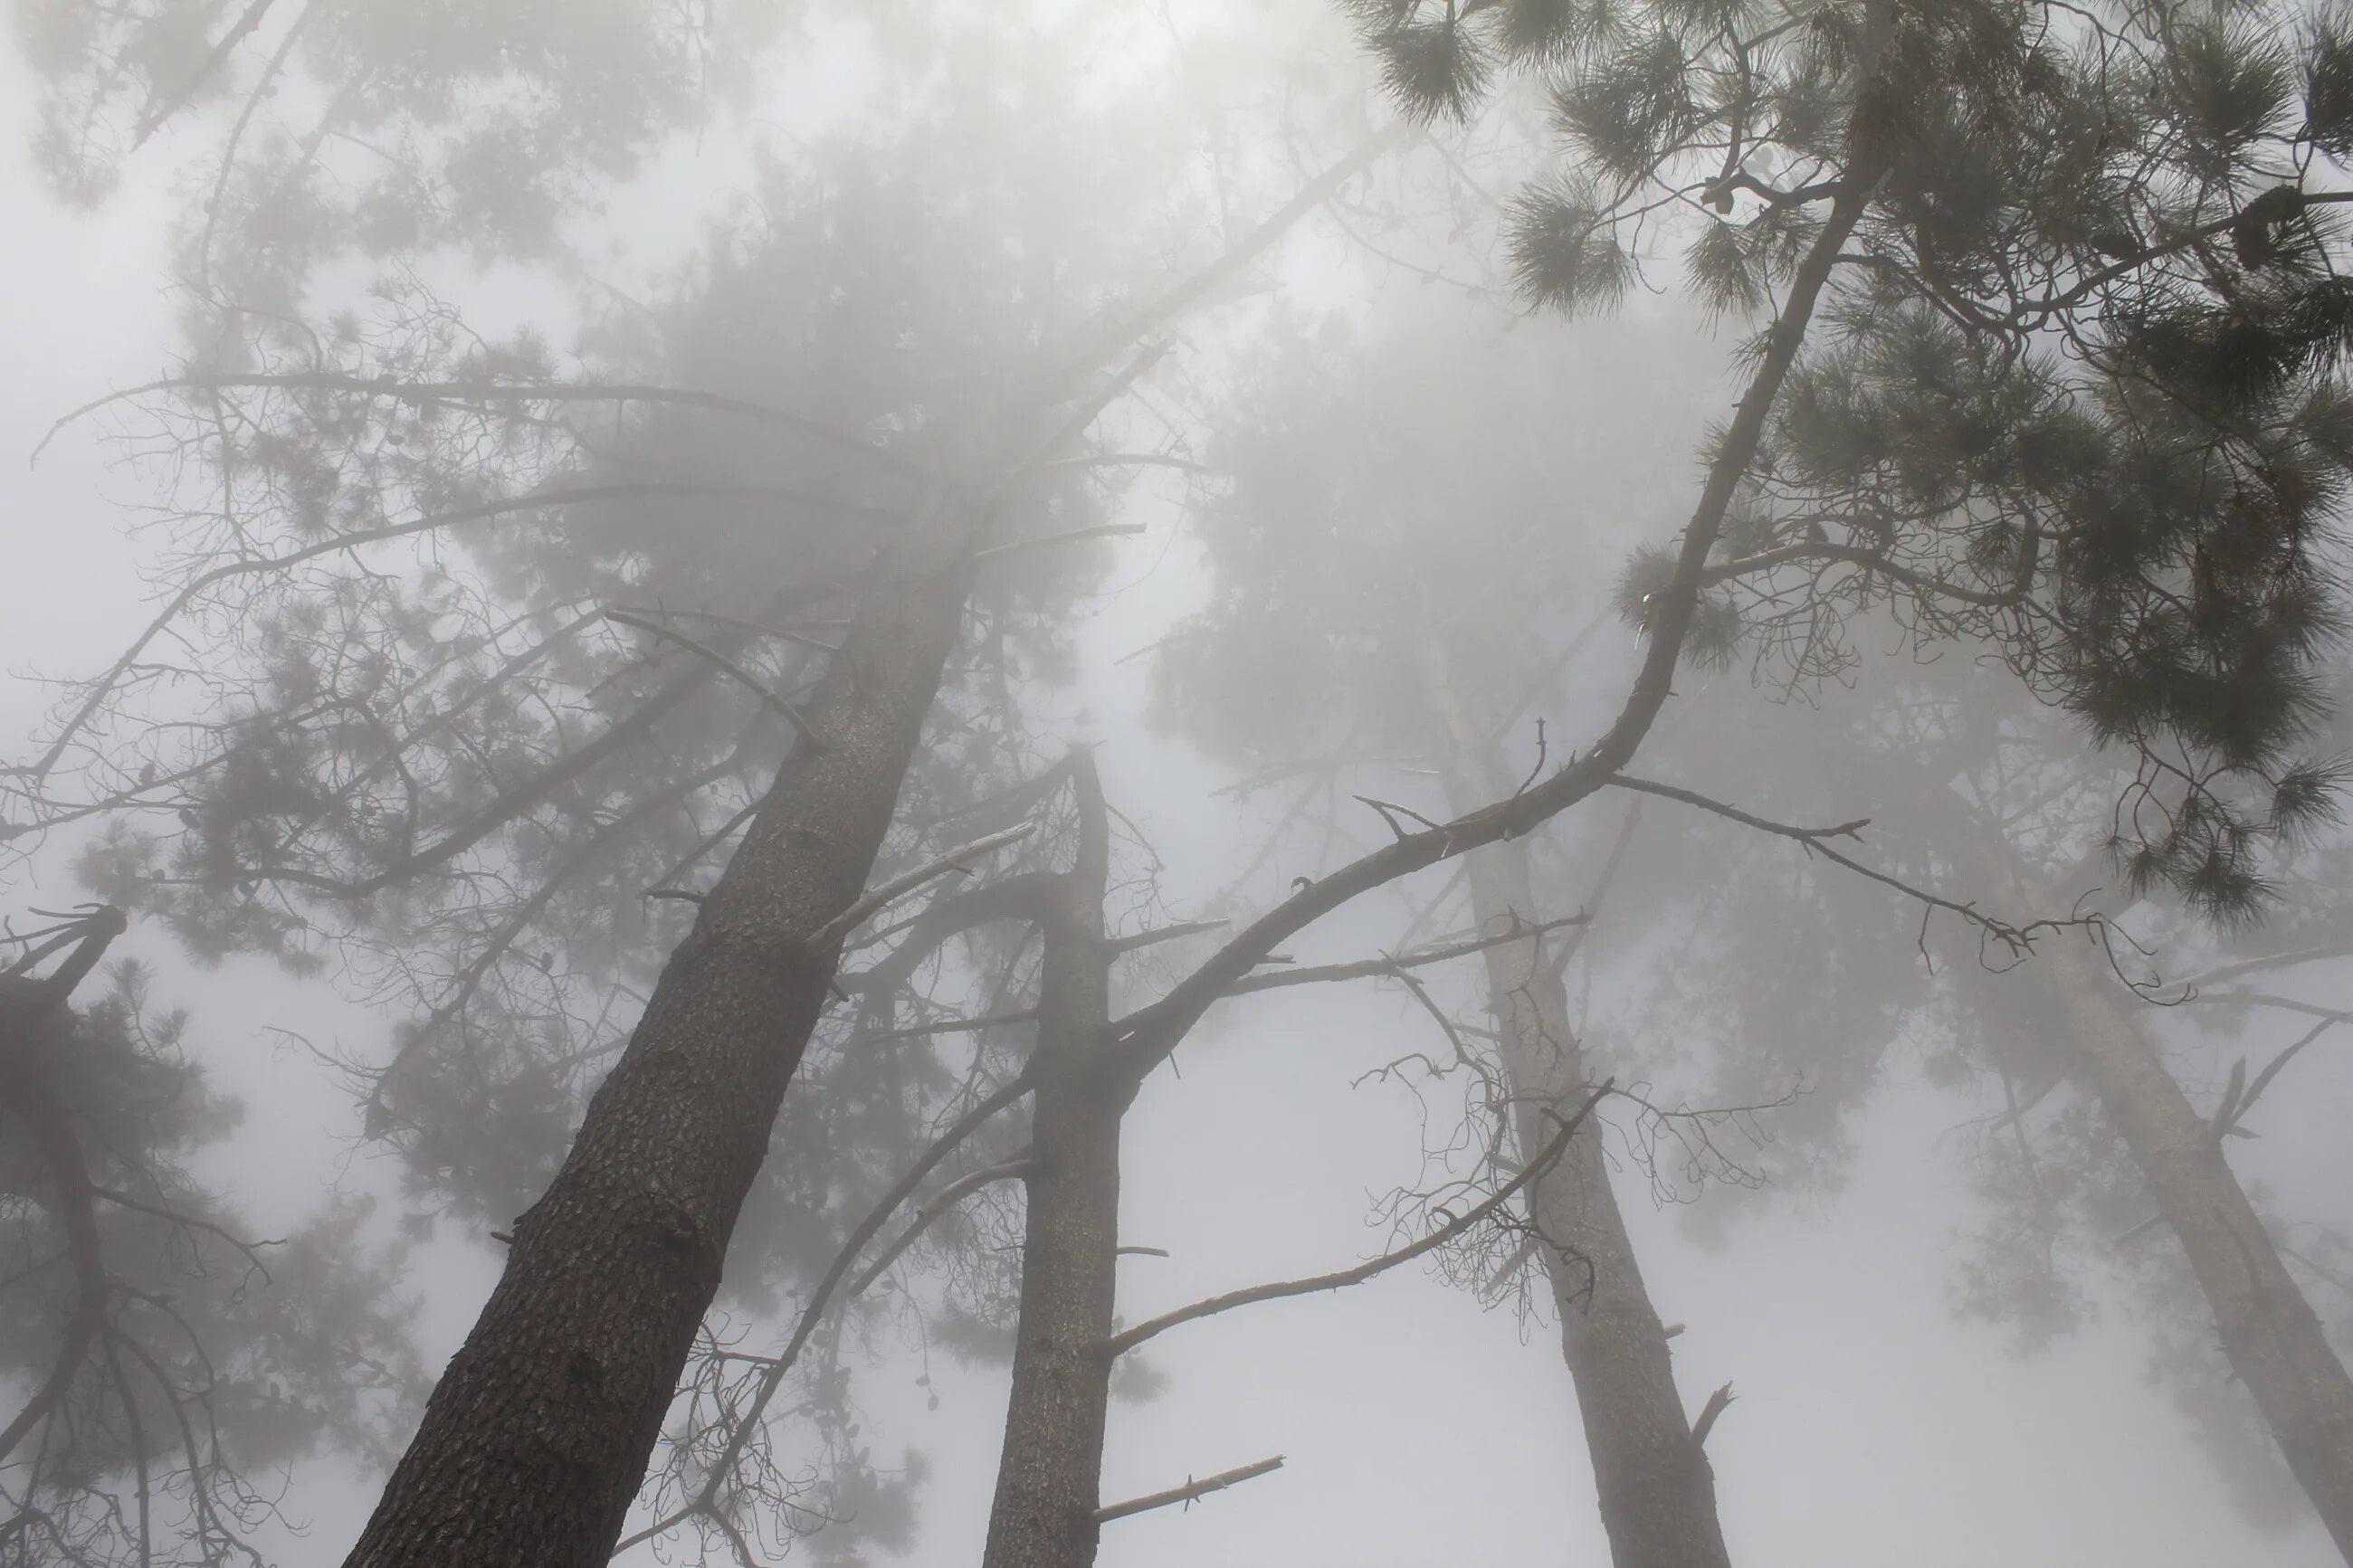 Ветвь туманного дерева. Деревья в тумане. Деревья в дымке. Серый туман. Ветви деревьев в тумане.